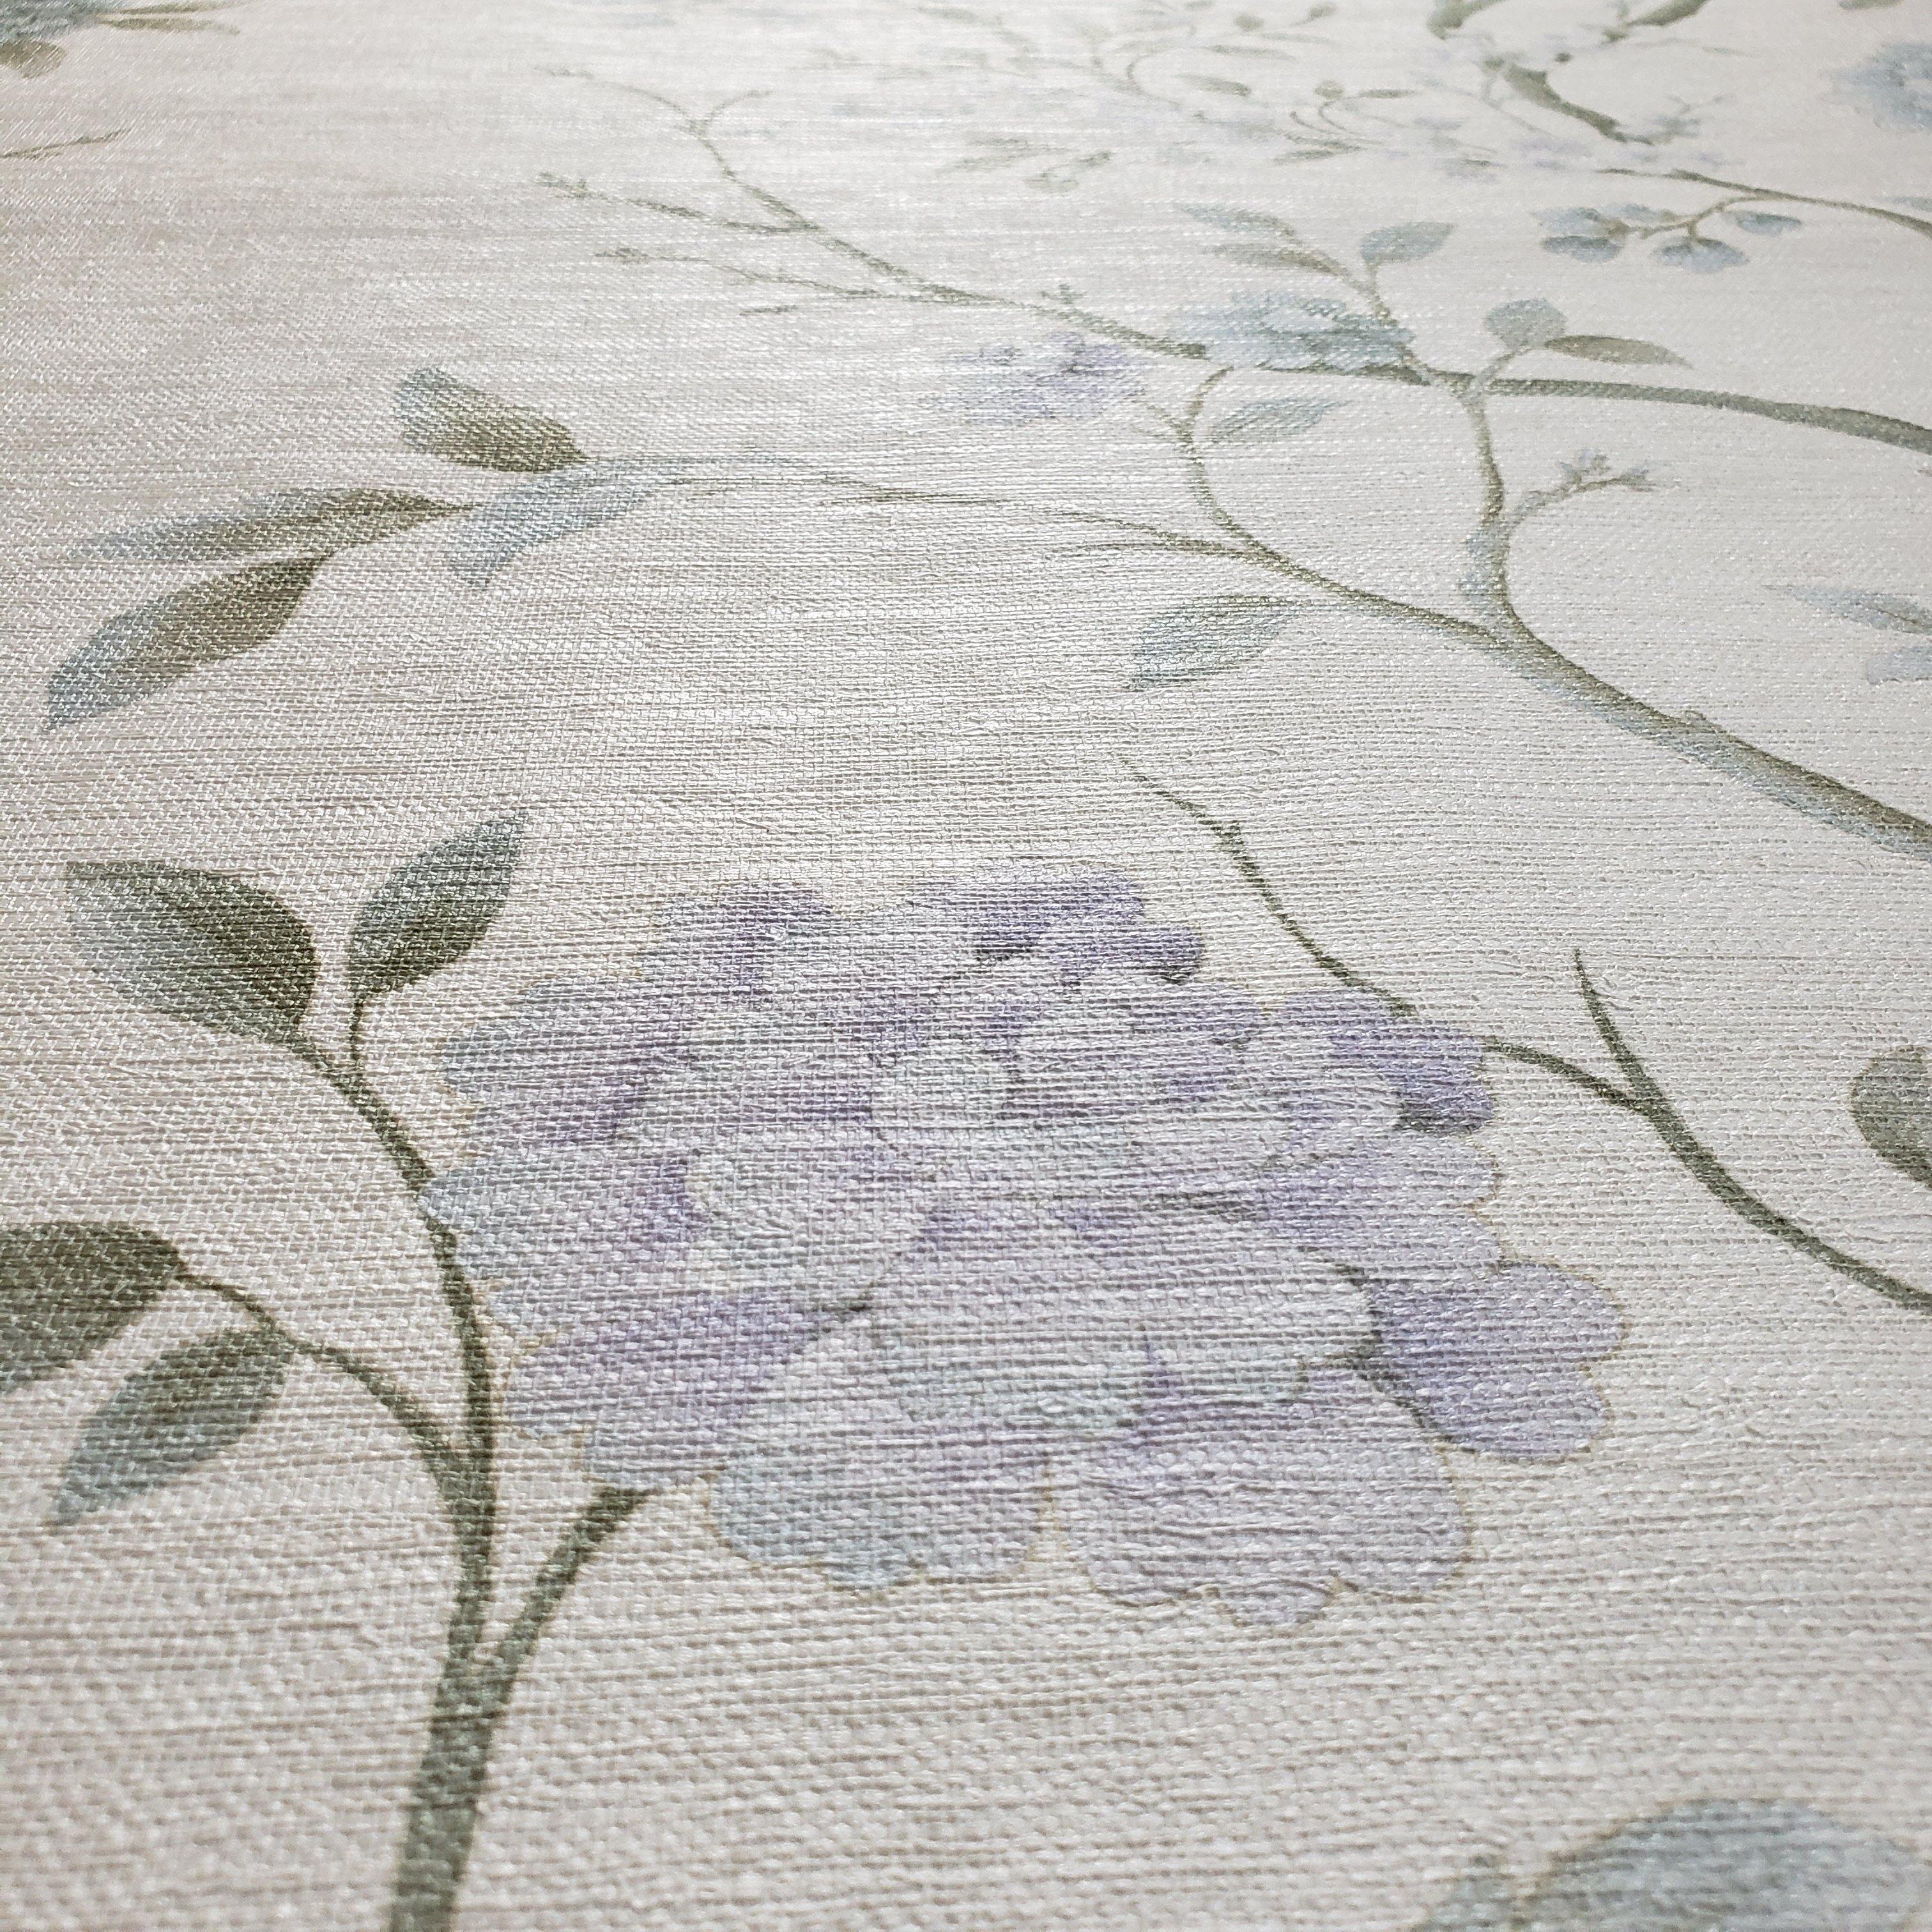 Fuzzy Wallpaper Floral High Pile Jacquard Burnout Velvet by Elotex  International Fabric (Navy)